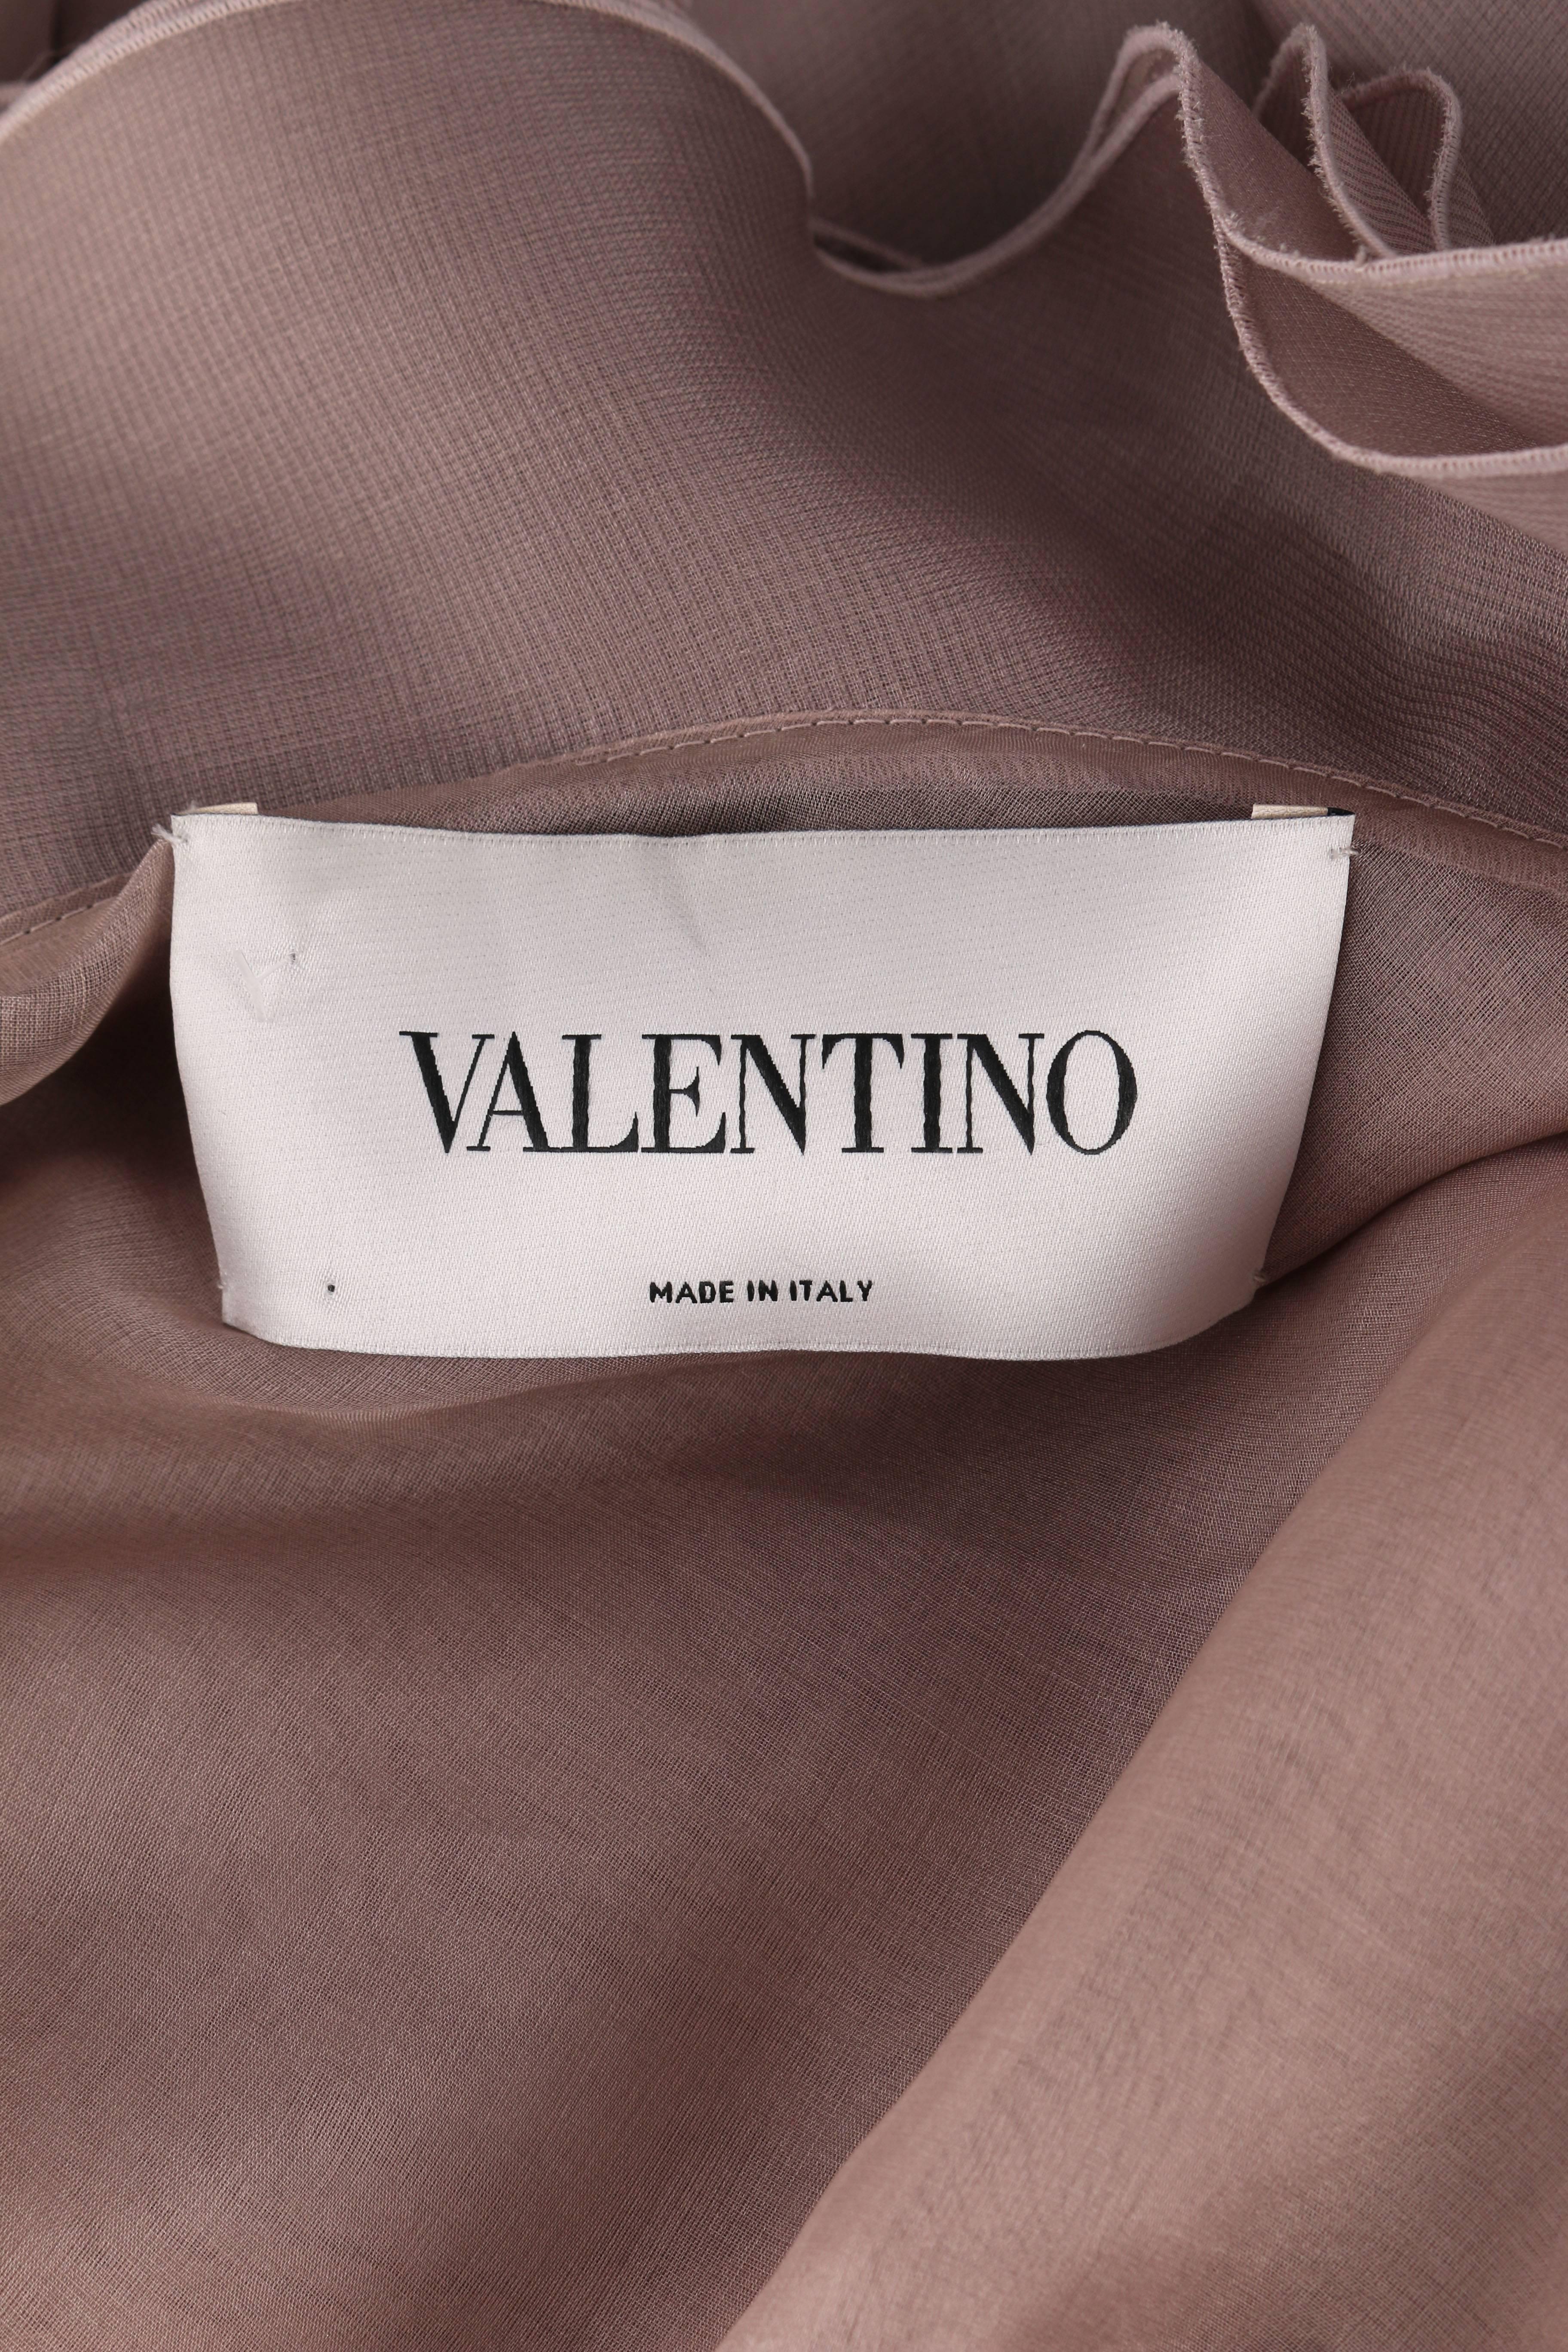 VALENTINO Spring 2010 Pale Mauve Pink Purple One Shoulder Ruffle Mini Dress 2